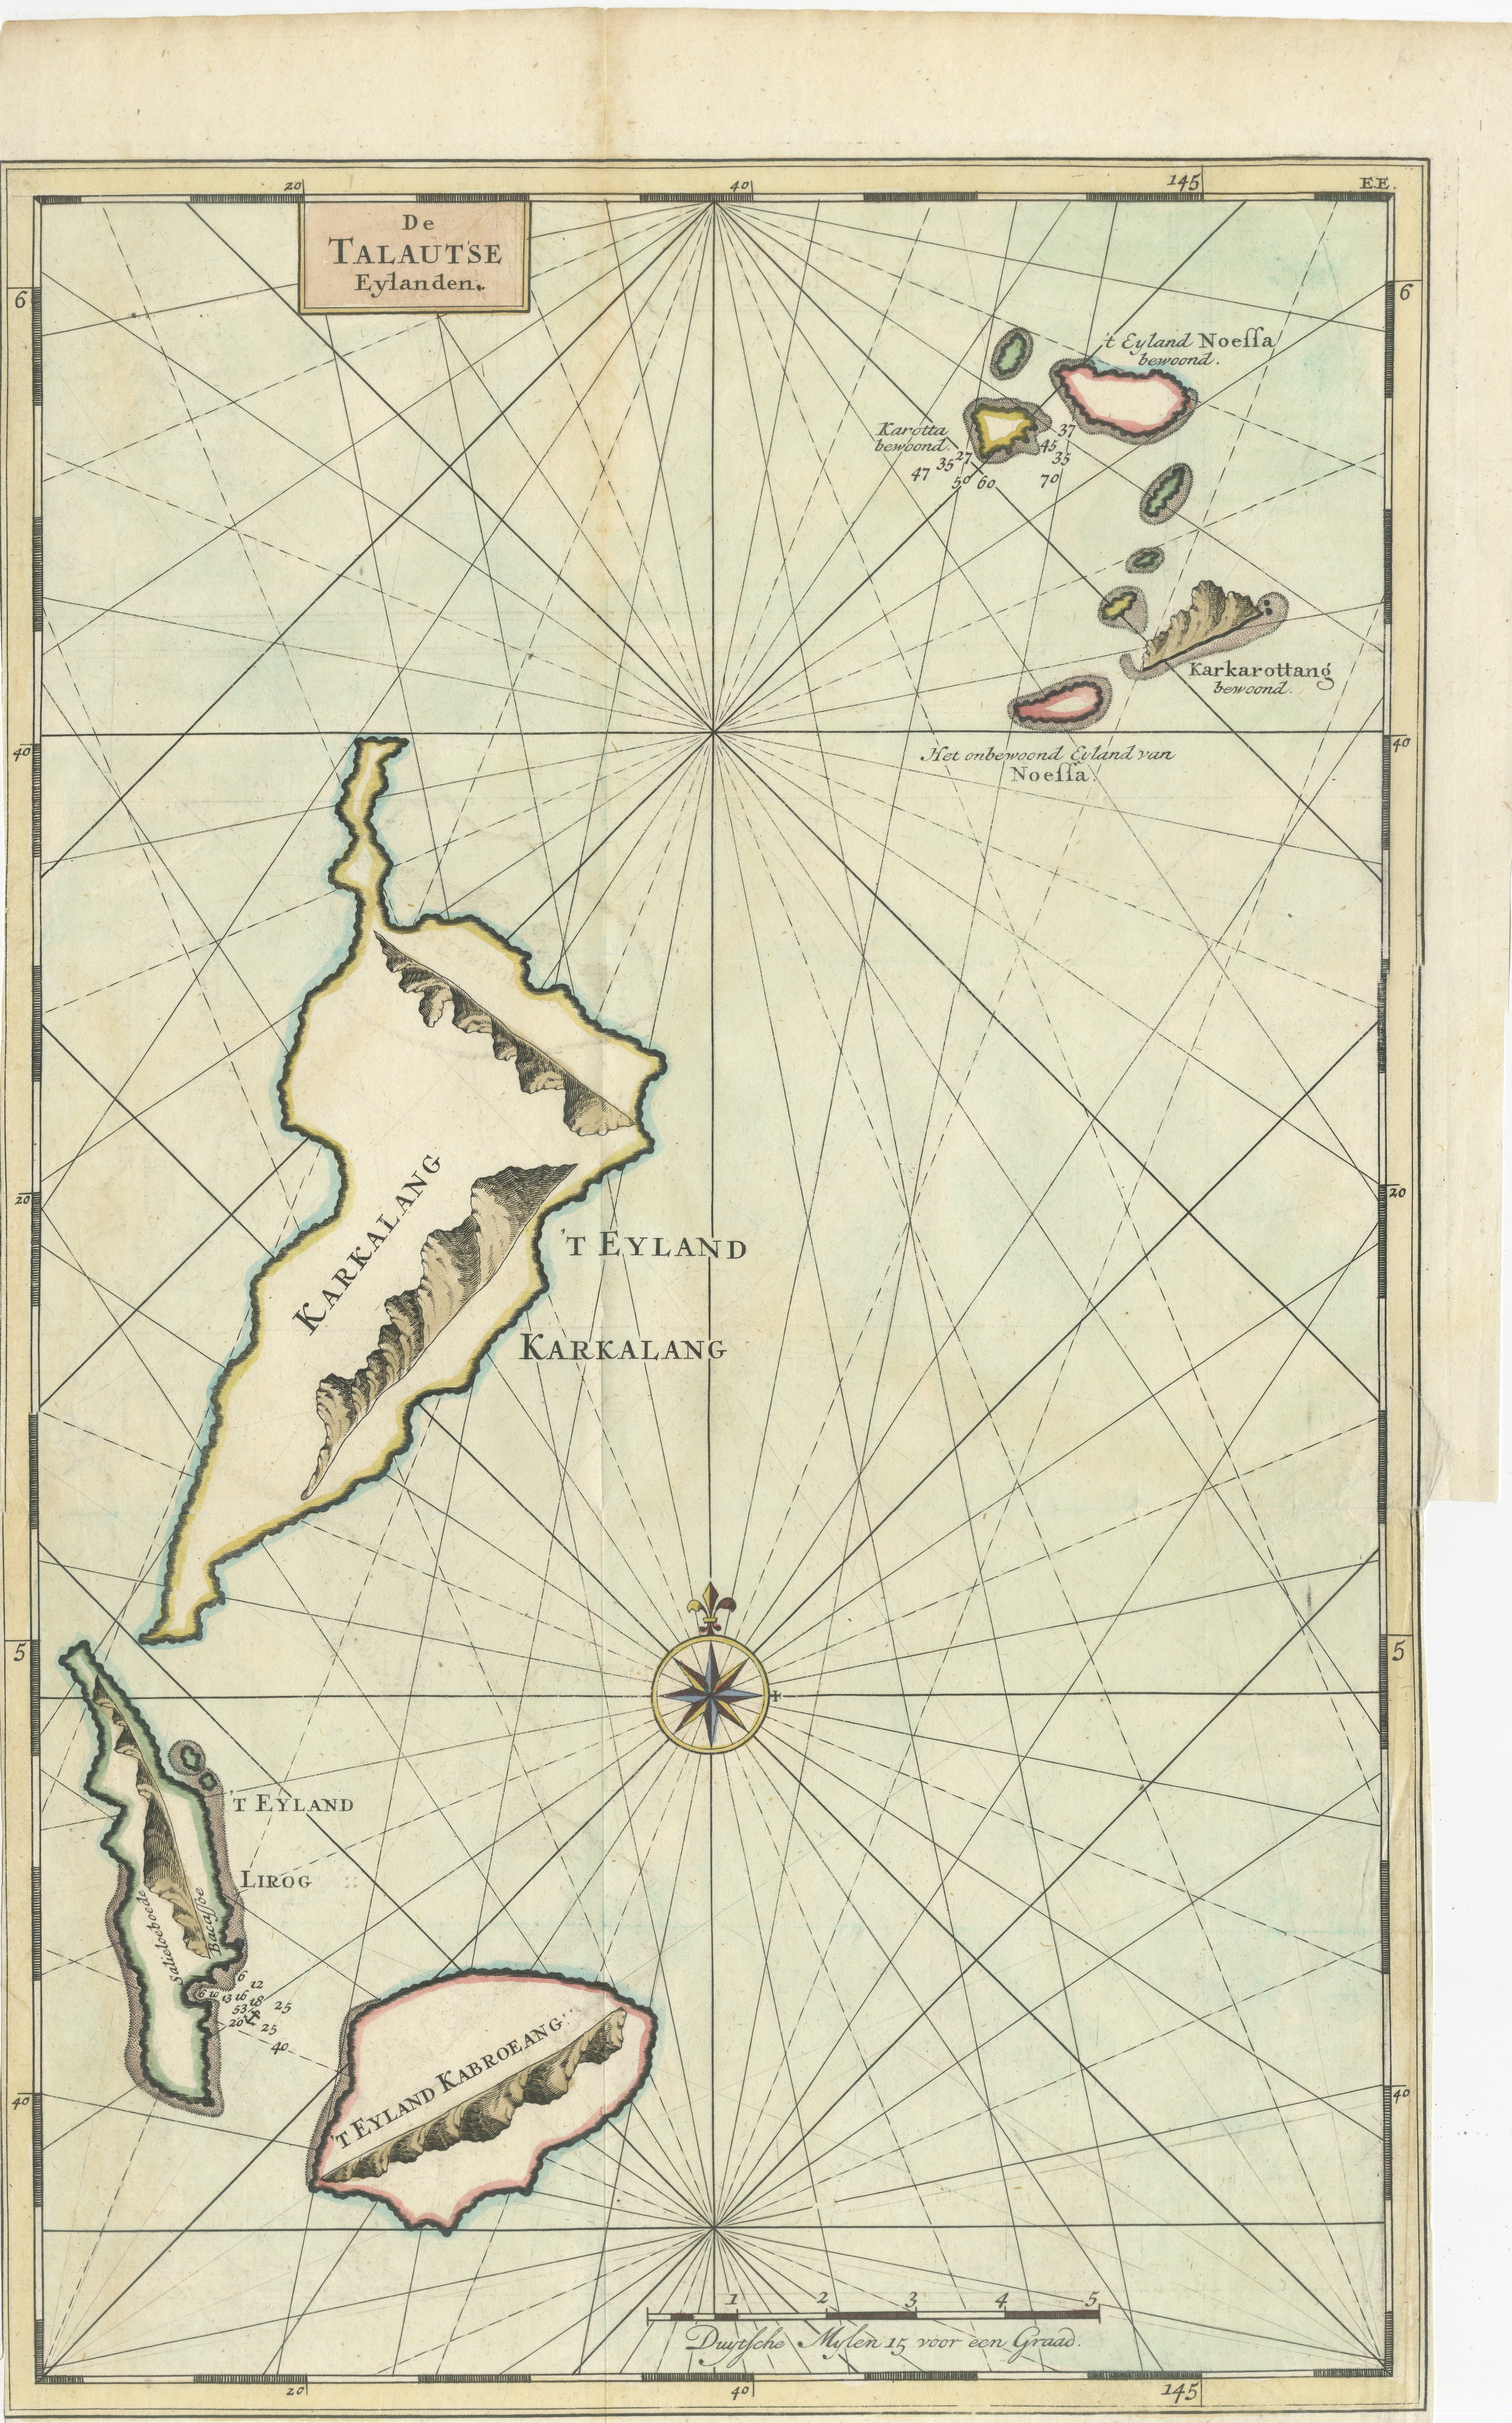 Dutch print with the title: De Talautse Eylanden

Map of the Sangi Islands, and of the Talaud Islands, Indonesia.

The map is taken from: 'Oud en Nieuw Oost-Indiën' van François Valentyn.

1) Ottens, Frederik (engraver / etcher)
2) Braam, J. van